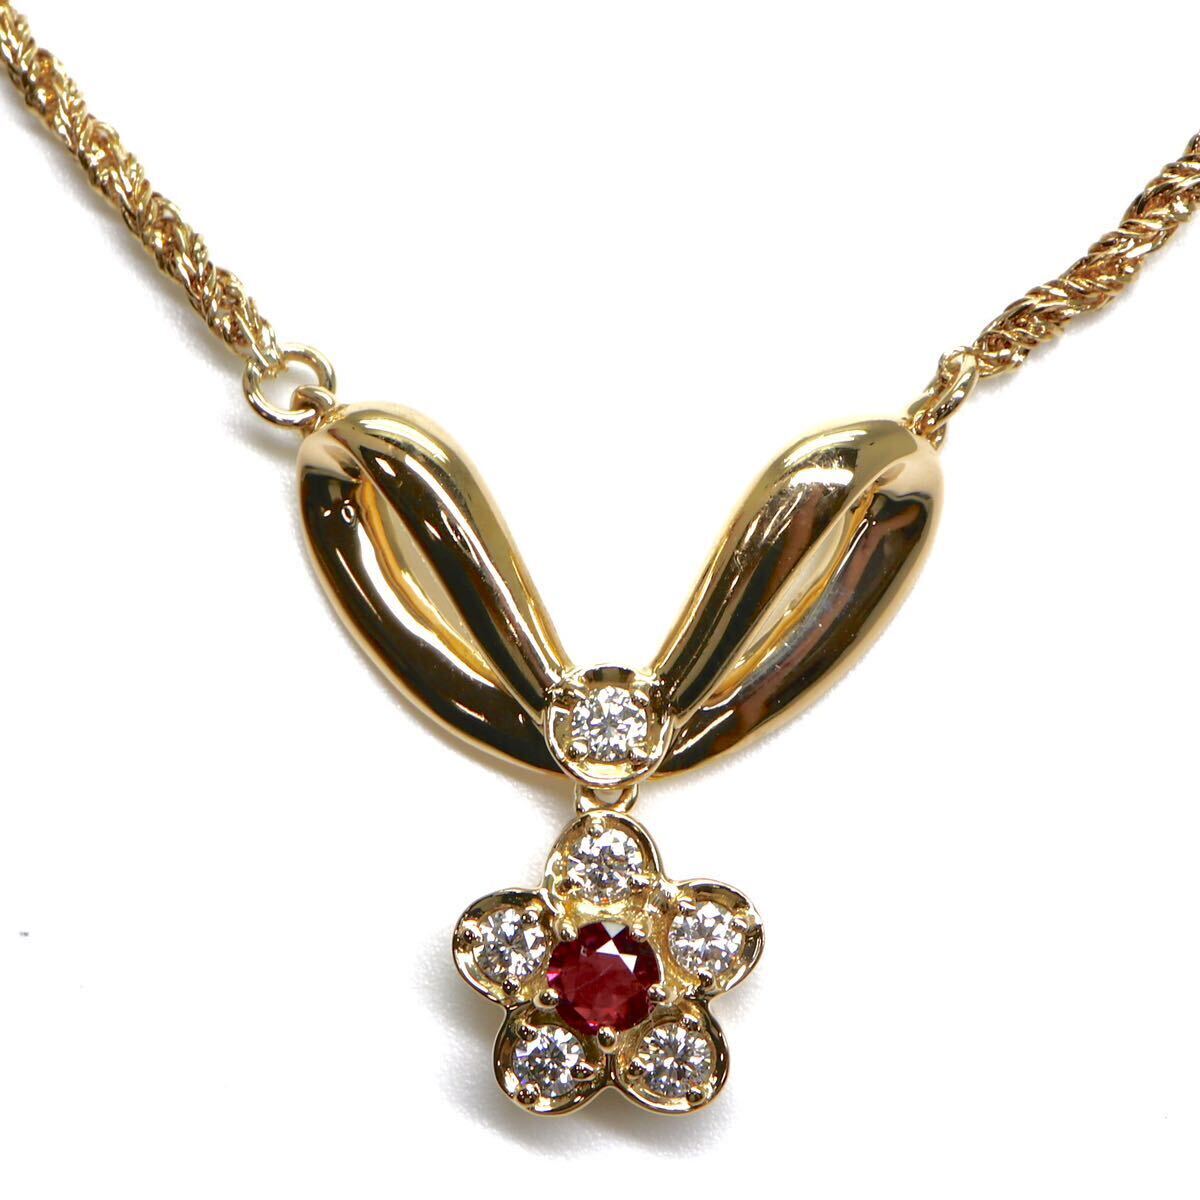 POLA jewelry(ポーラ)◆K18 天然ダイヤモンドネックレス◆M 約8.9g 約39.5cm diamond ruby necklace jewelry ジュエリー EH4/EH6の画像1